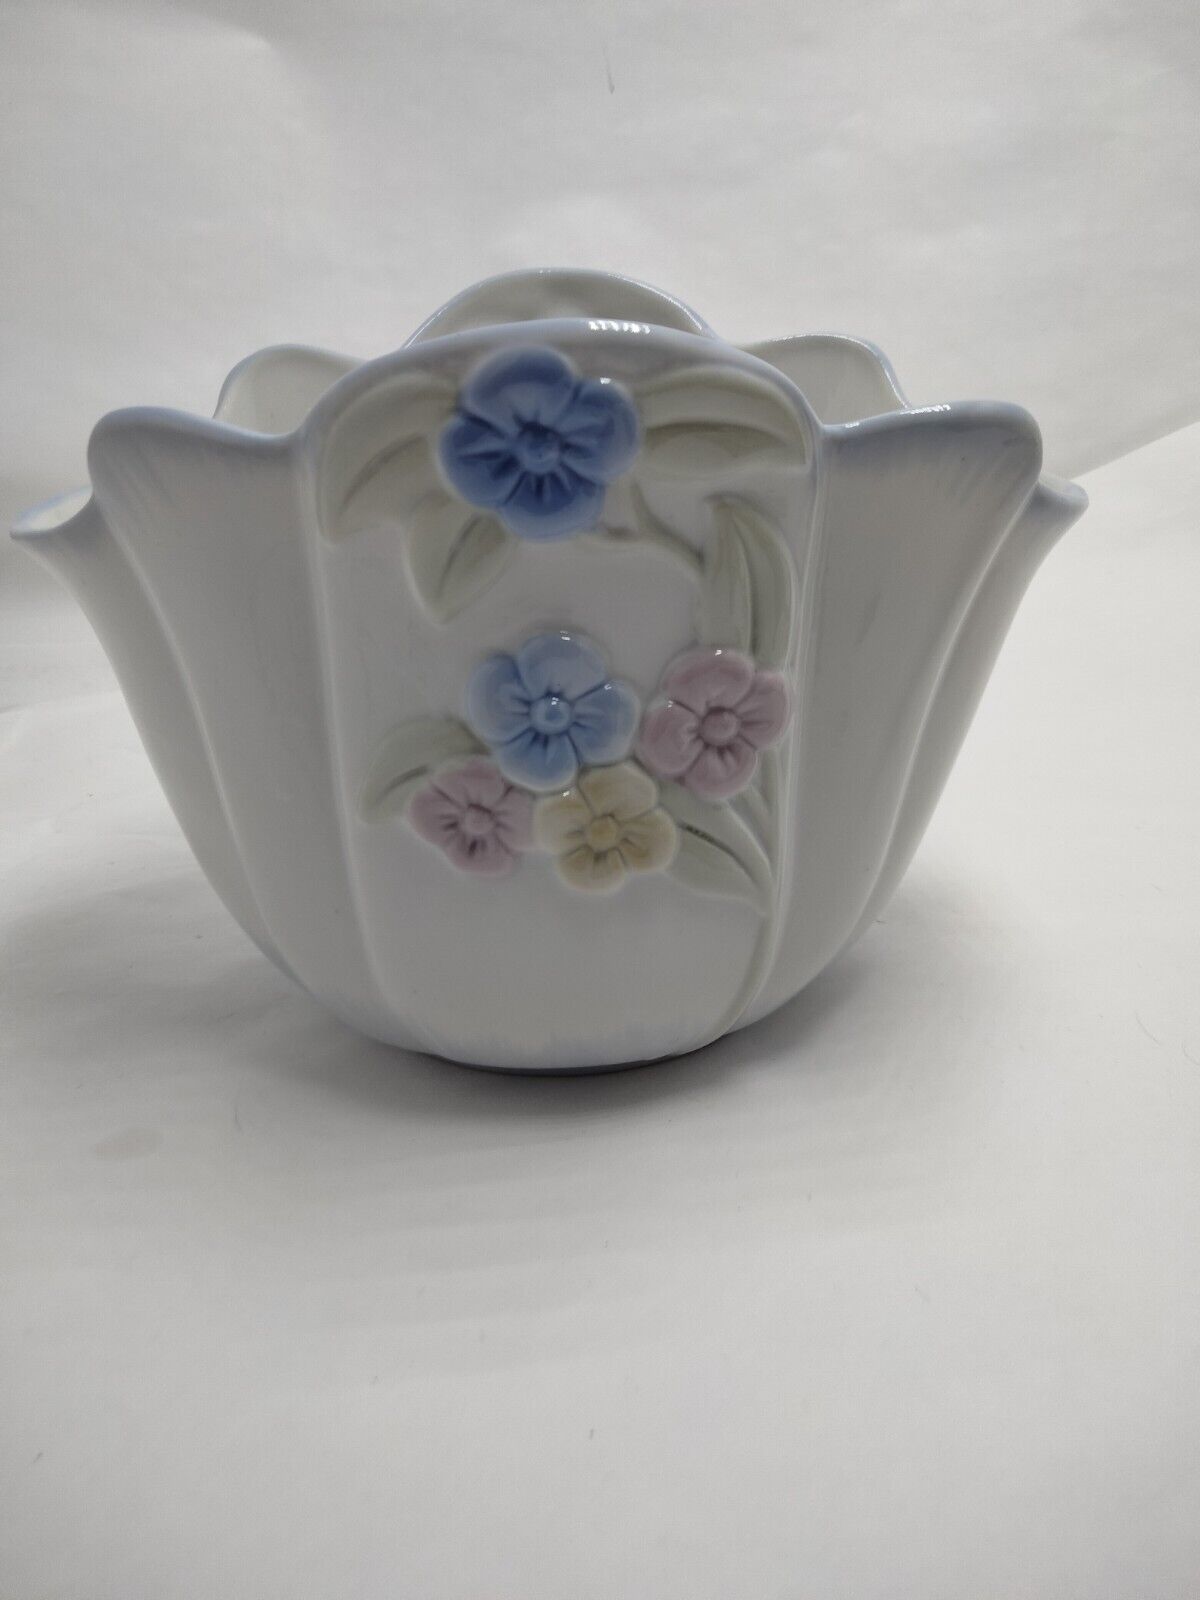 Vintage FTD Especially For You Ceramic Flower Vase 1992 white ceramic 3D flowers